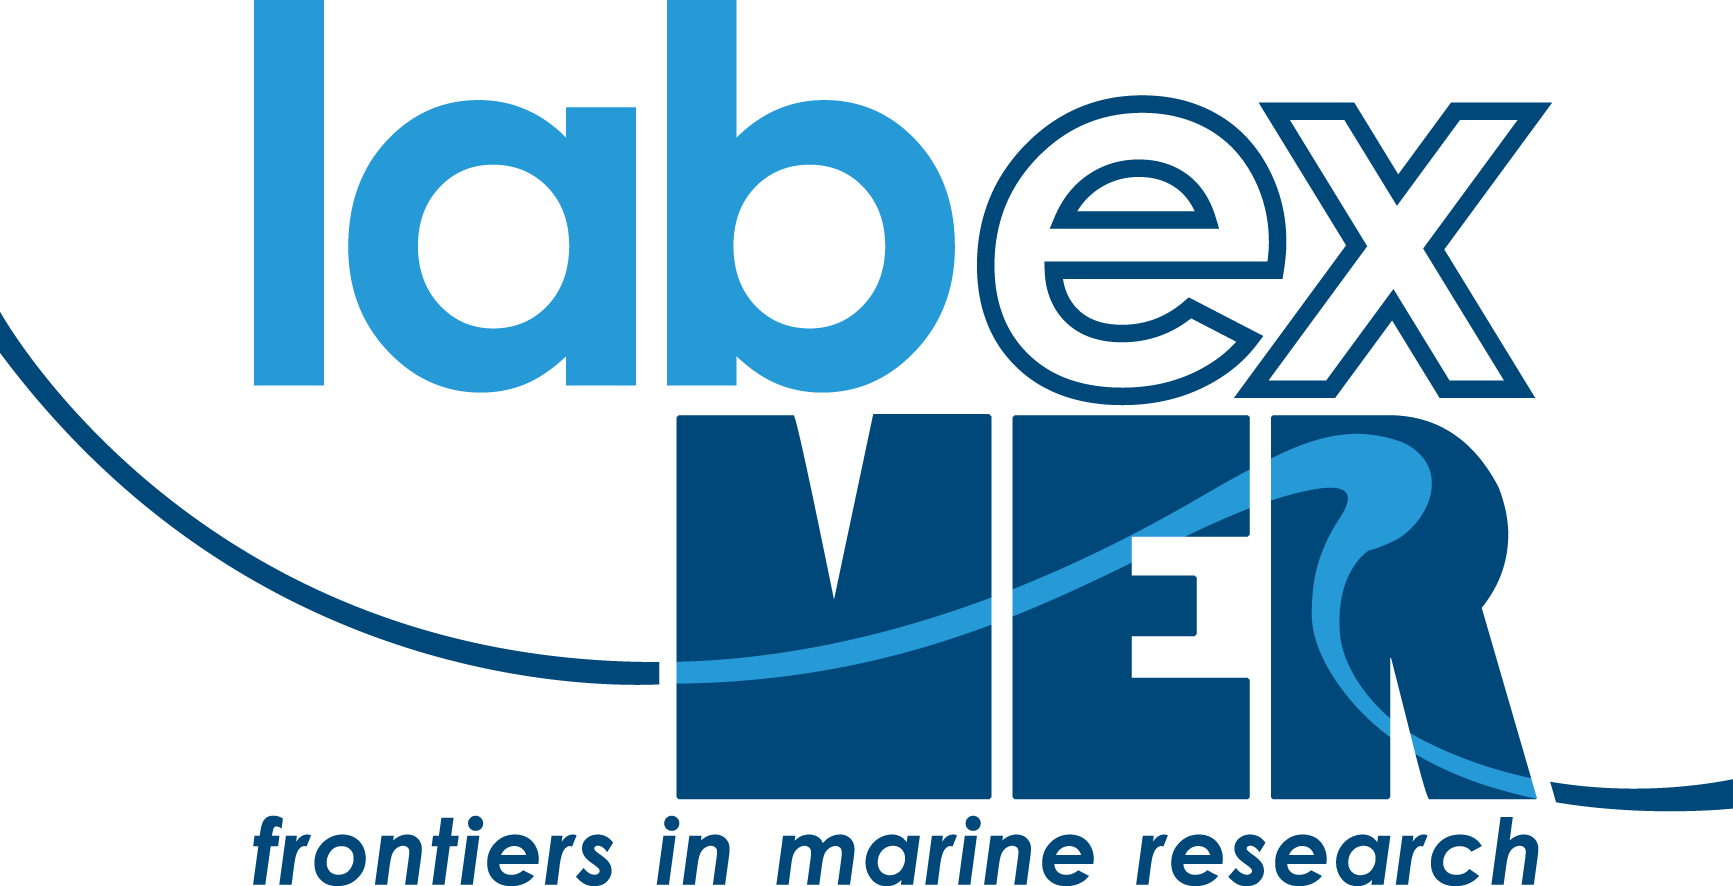 labex-logo.png